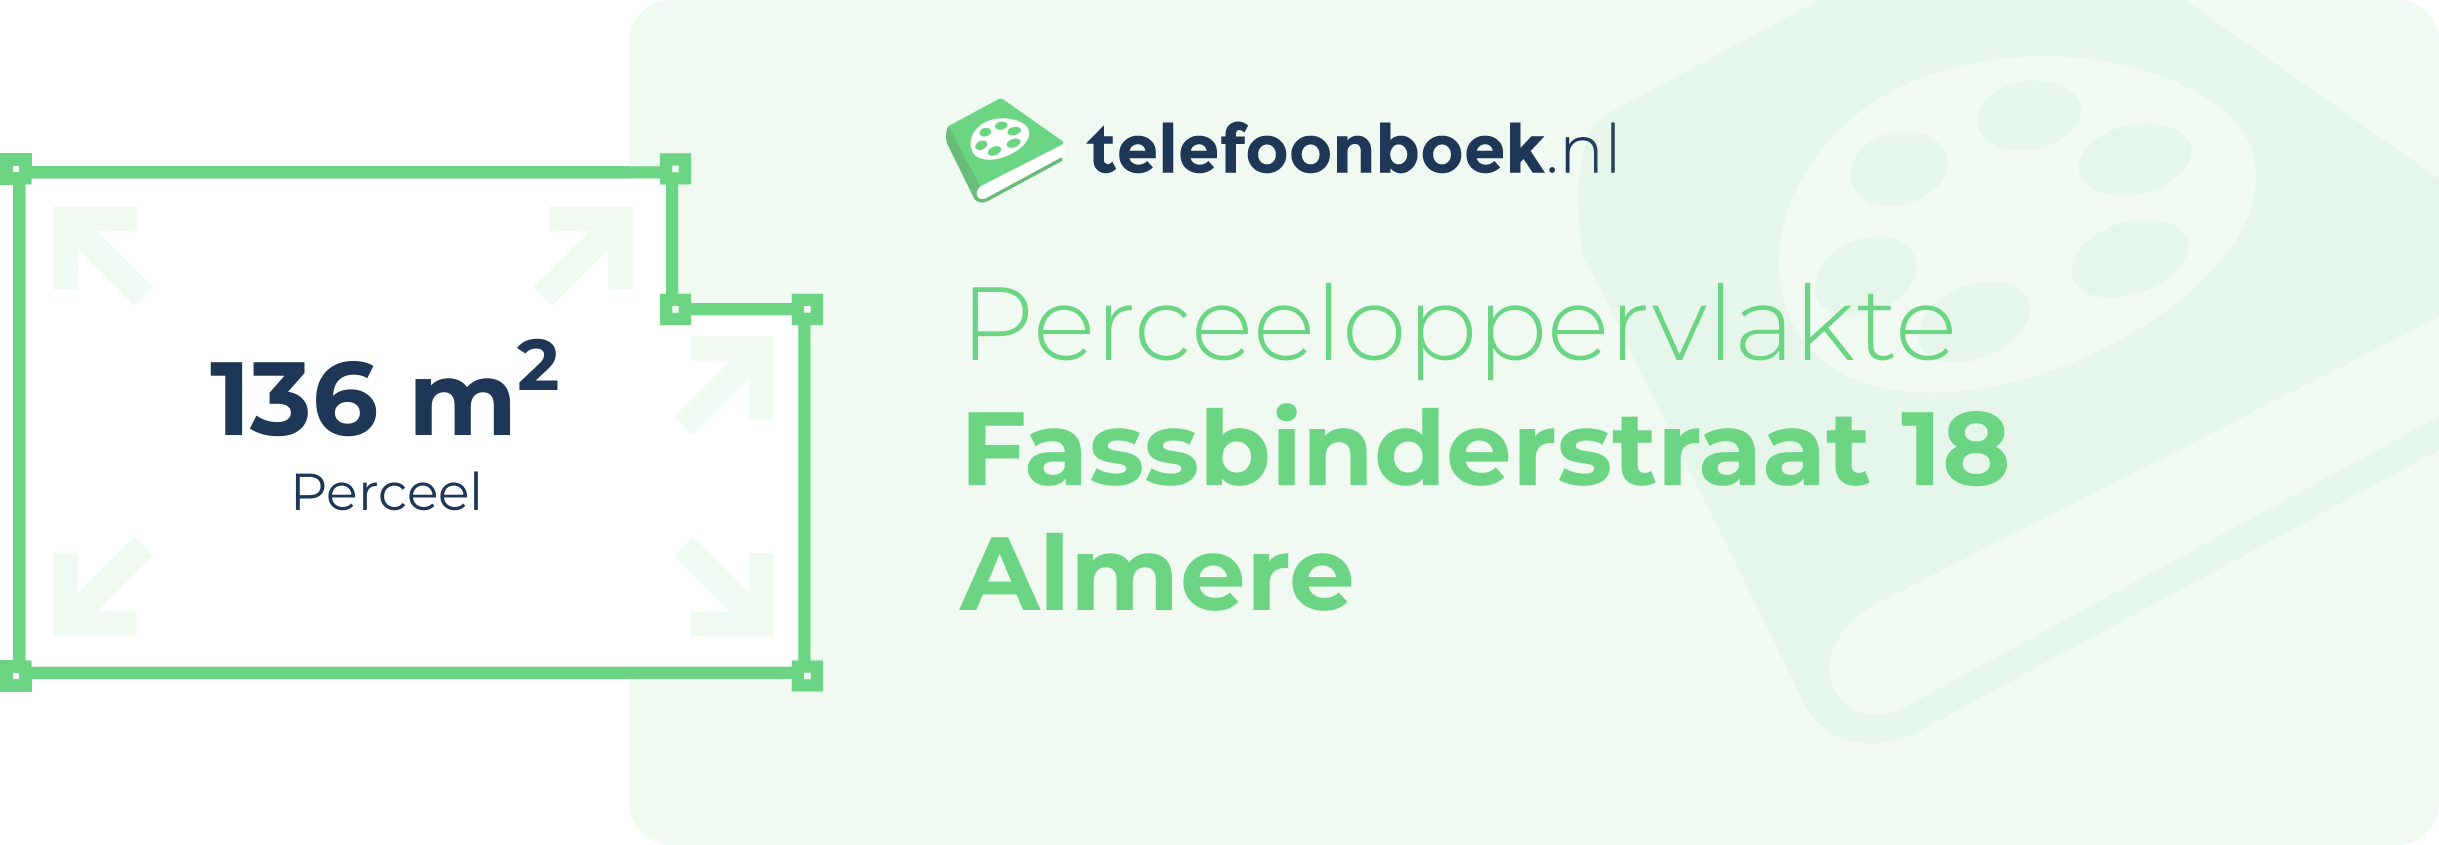 Perceeloppervlakte Fassbinderstraat 18 Almere